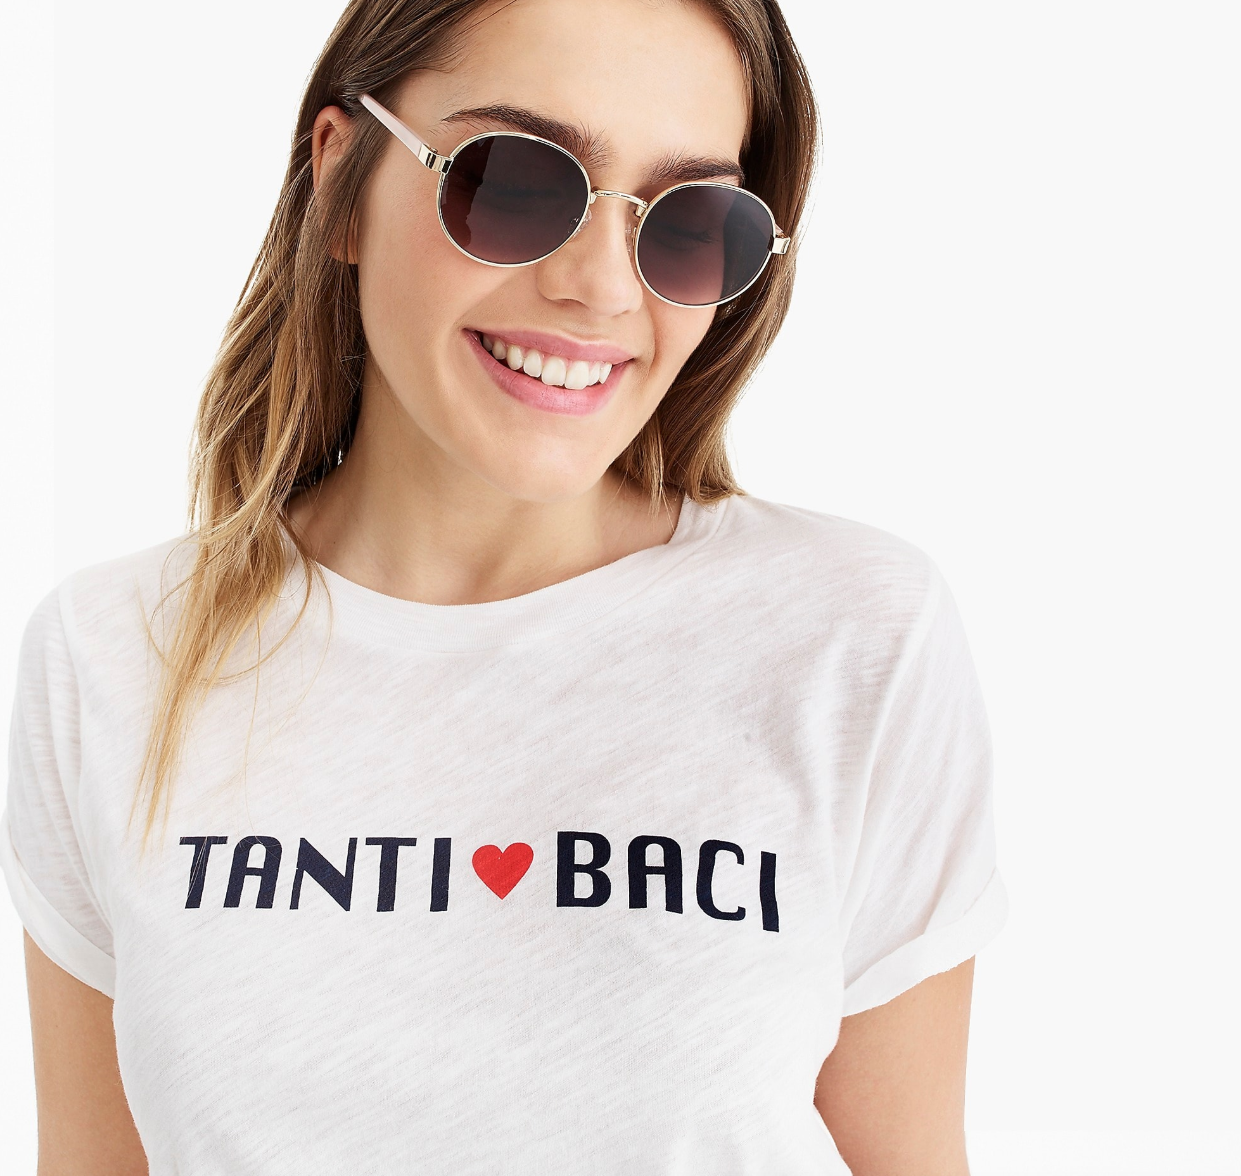 Camilla Atkins, CATKINS DESIGN for J. Crew Spring 2019, Tanti Baci screen printed tee shirt- women's apparel.png